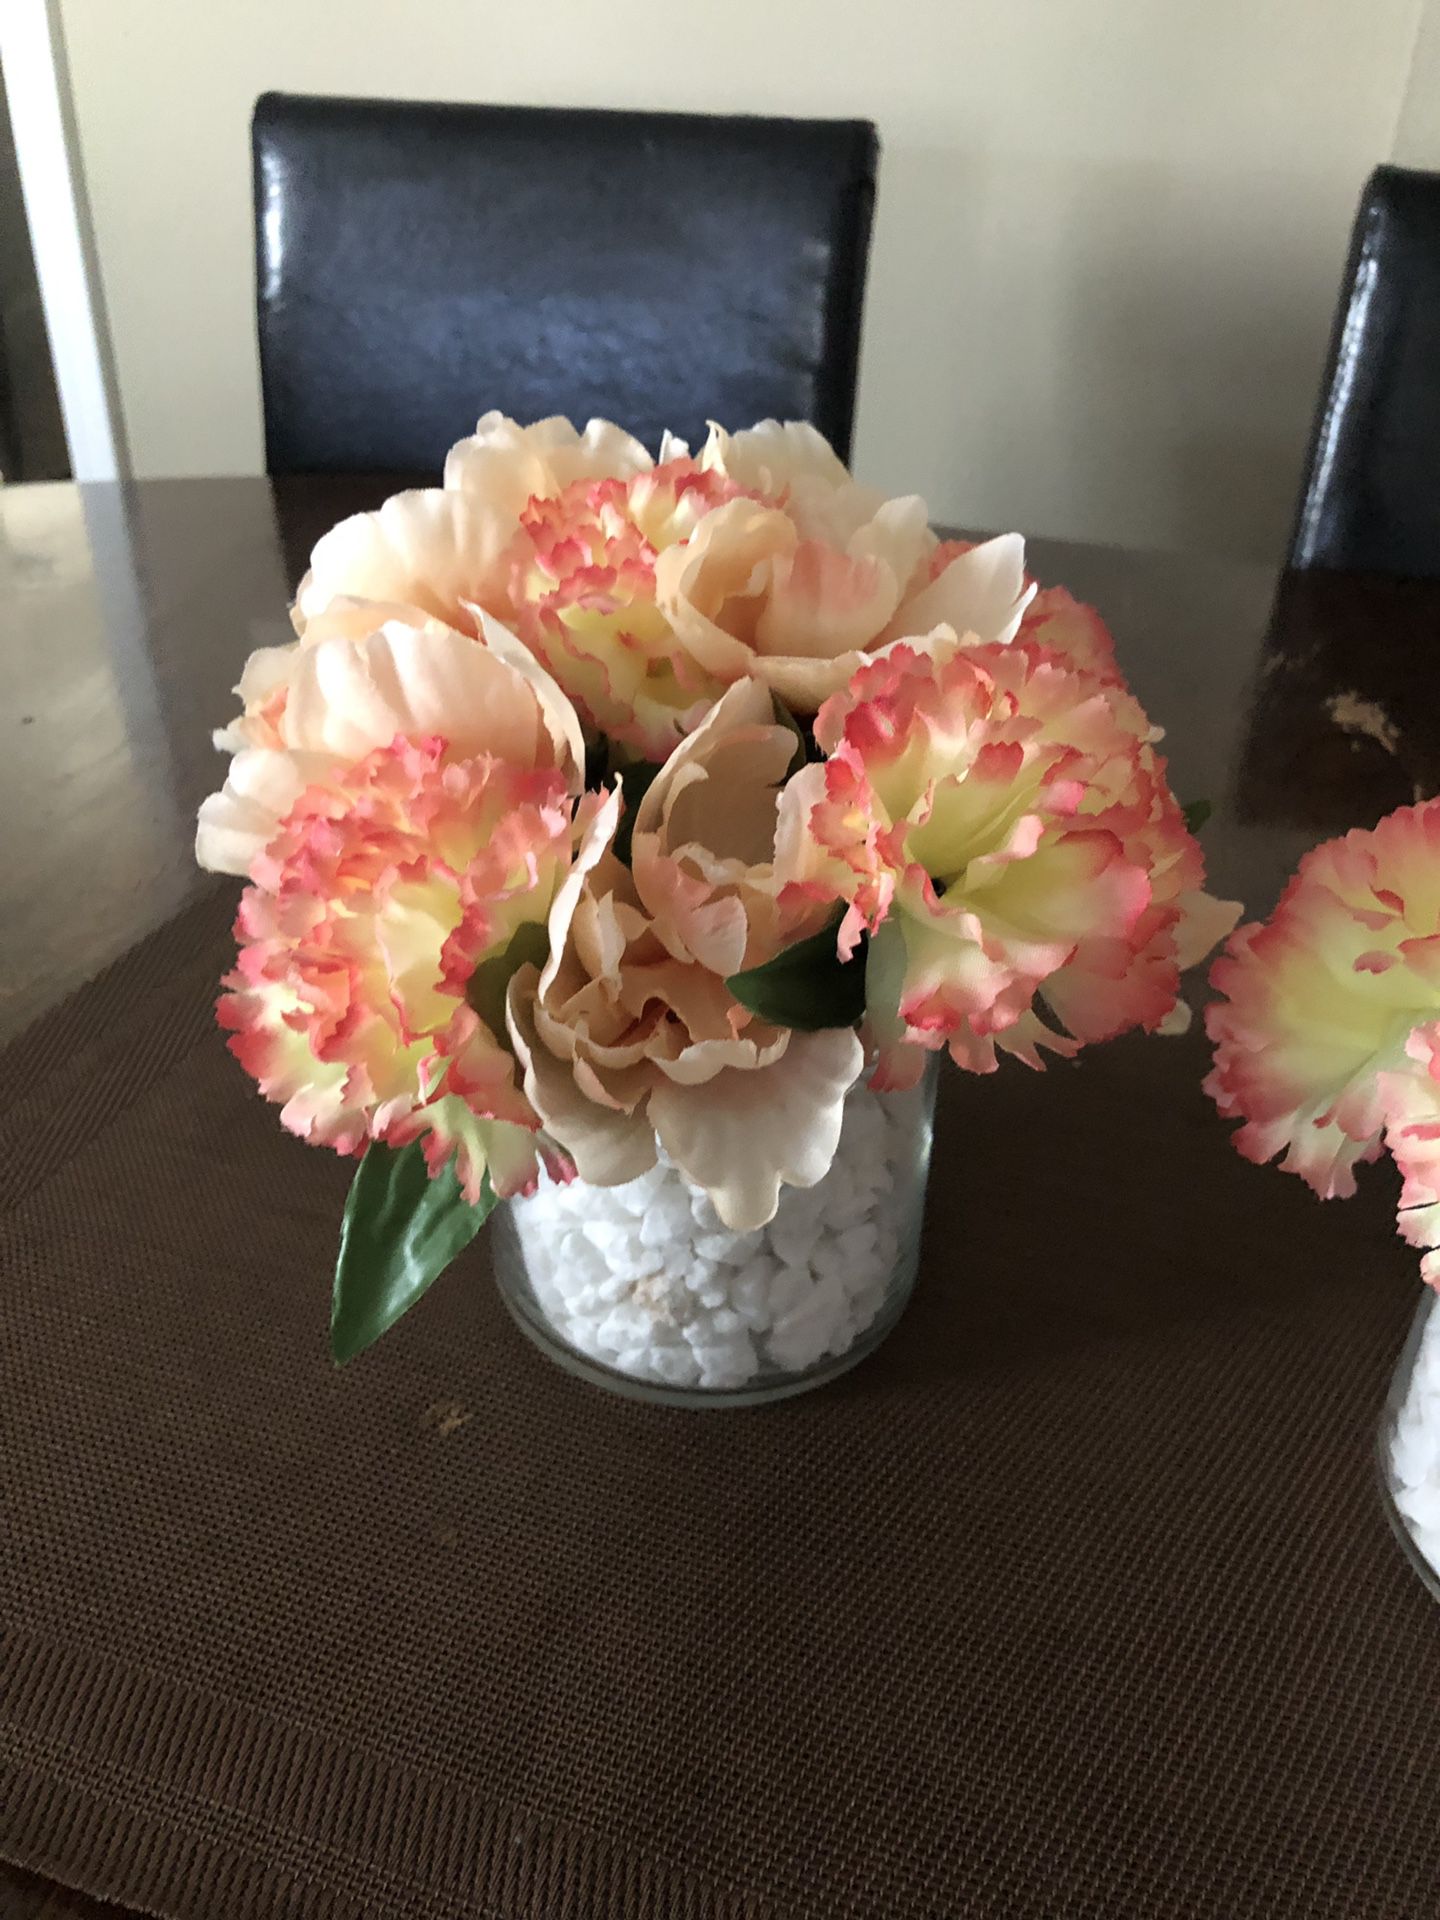 Decorative flower arrangement